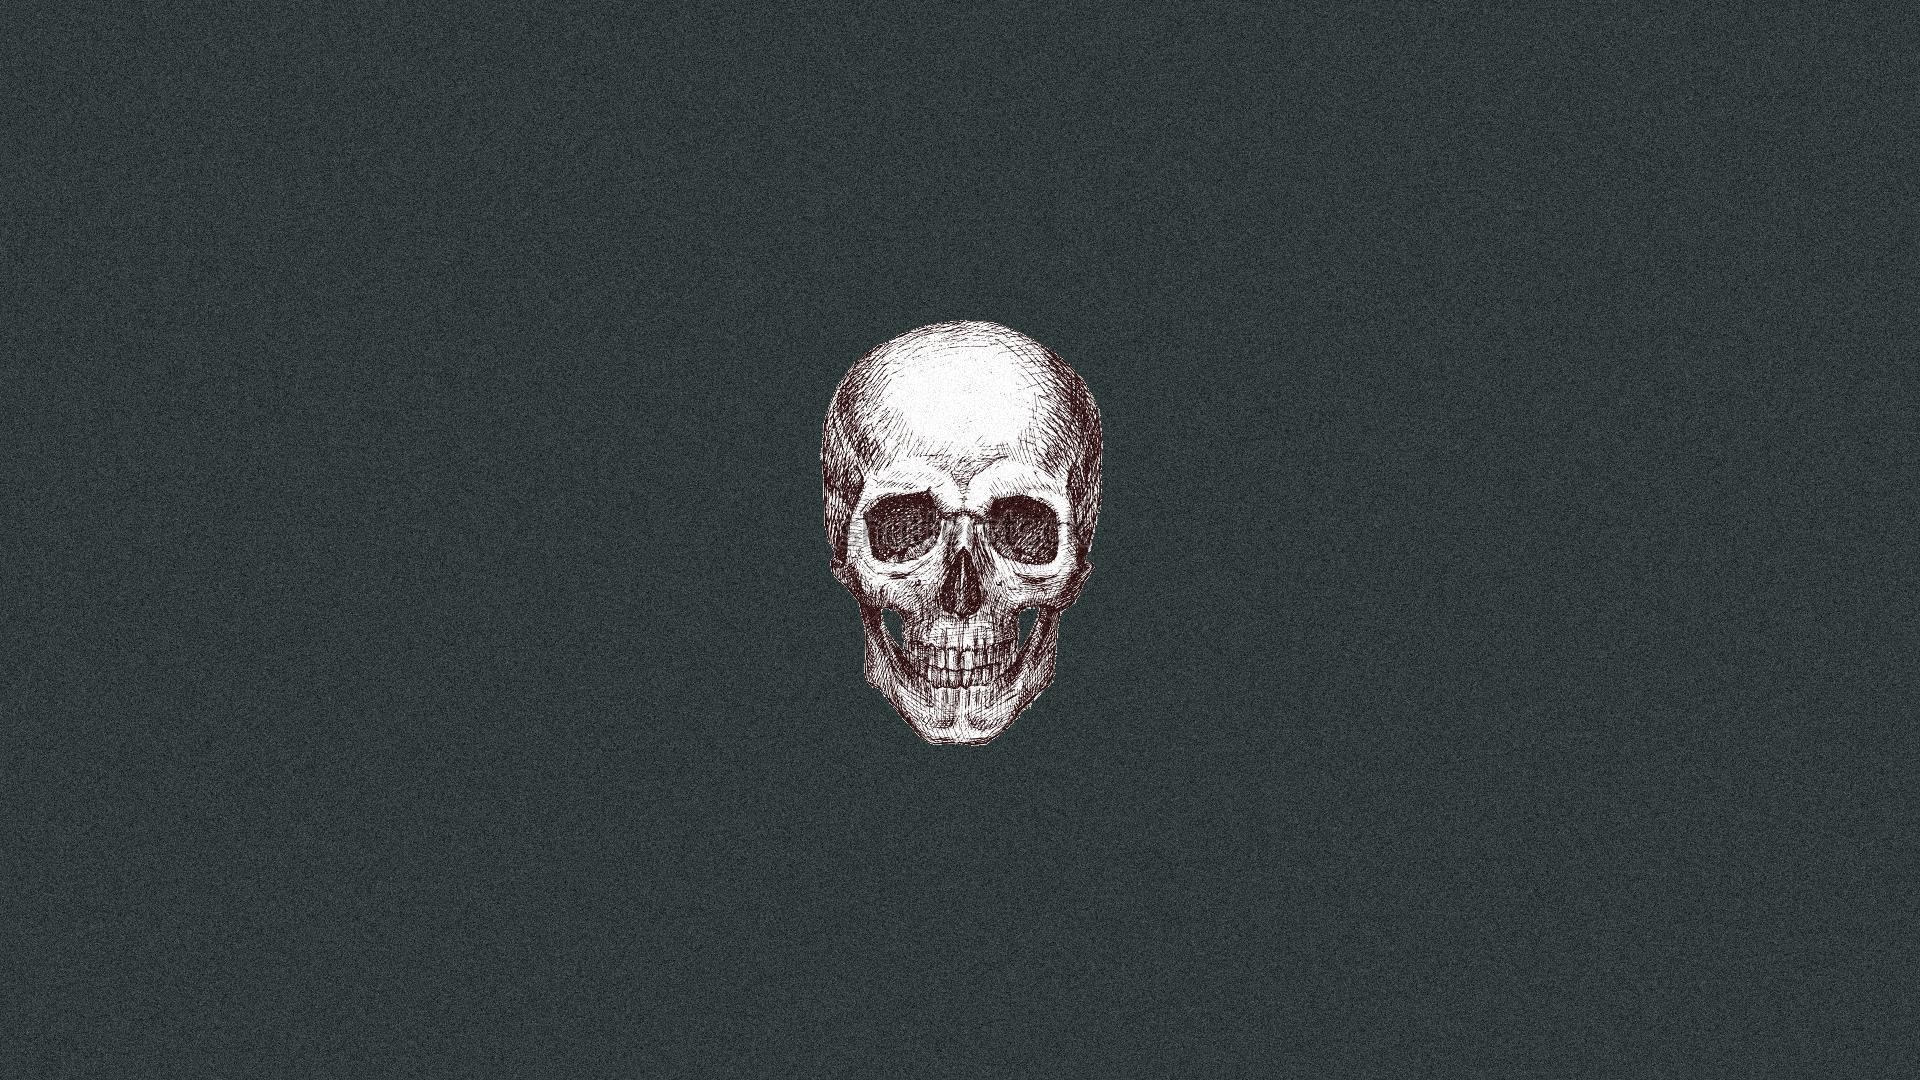 General 1920x1080 skull minimalism simple background digital art artwork